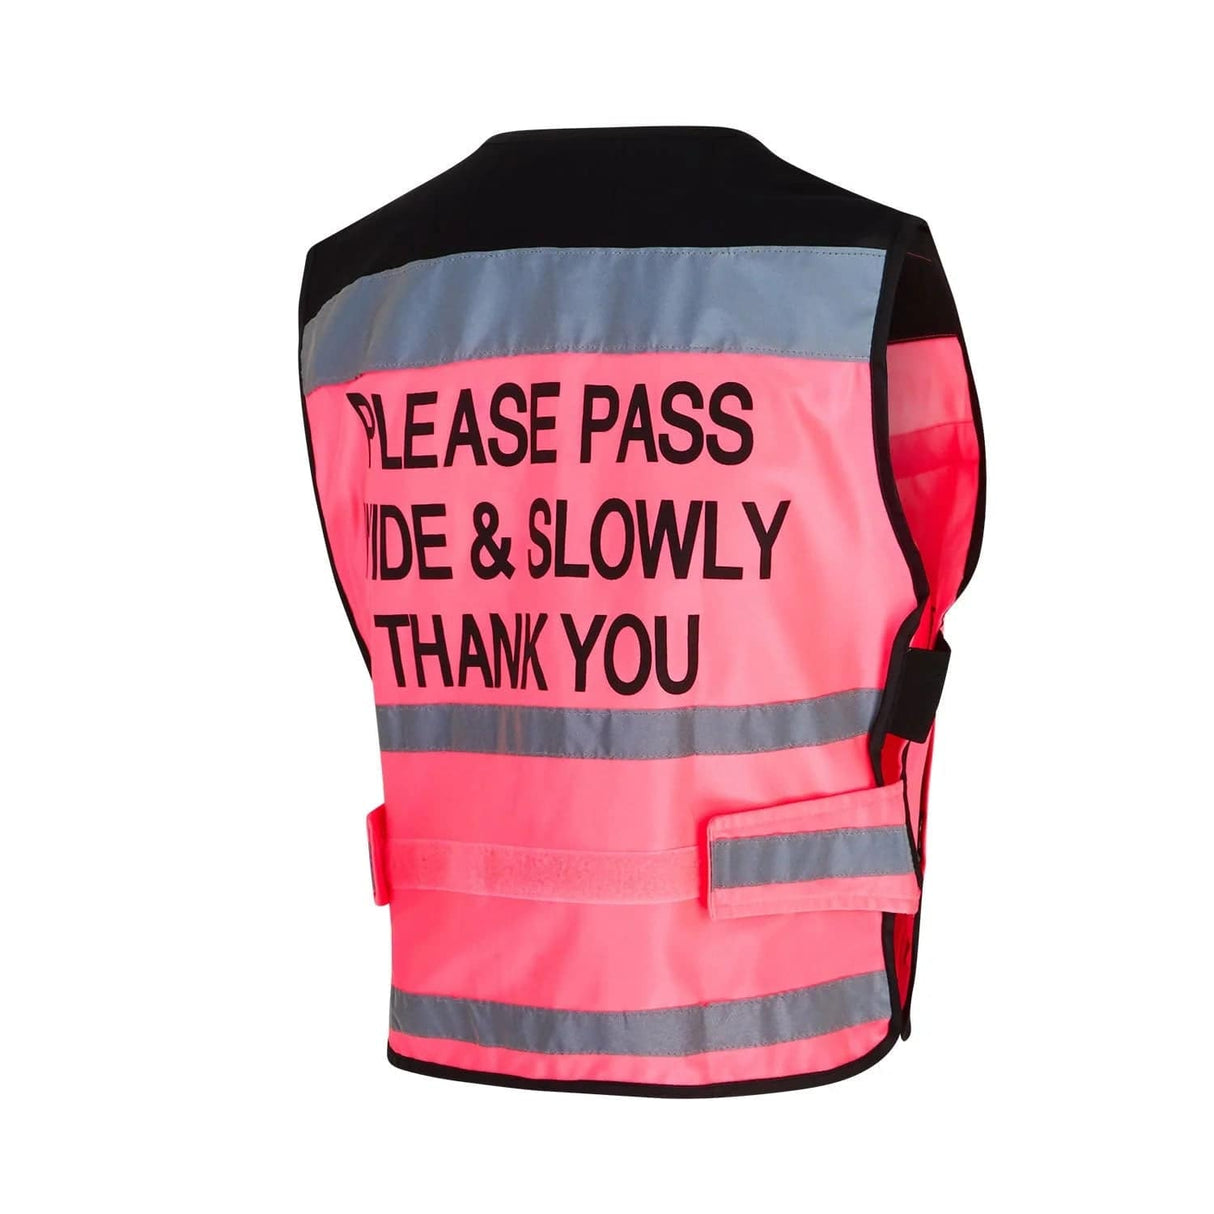 Equisafety Hi Viz Waistcoats Pass Wide & Slowly For Air Jackets Hi-Vis Pink Small Barnstaple Equestrian Supplies